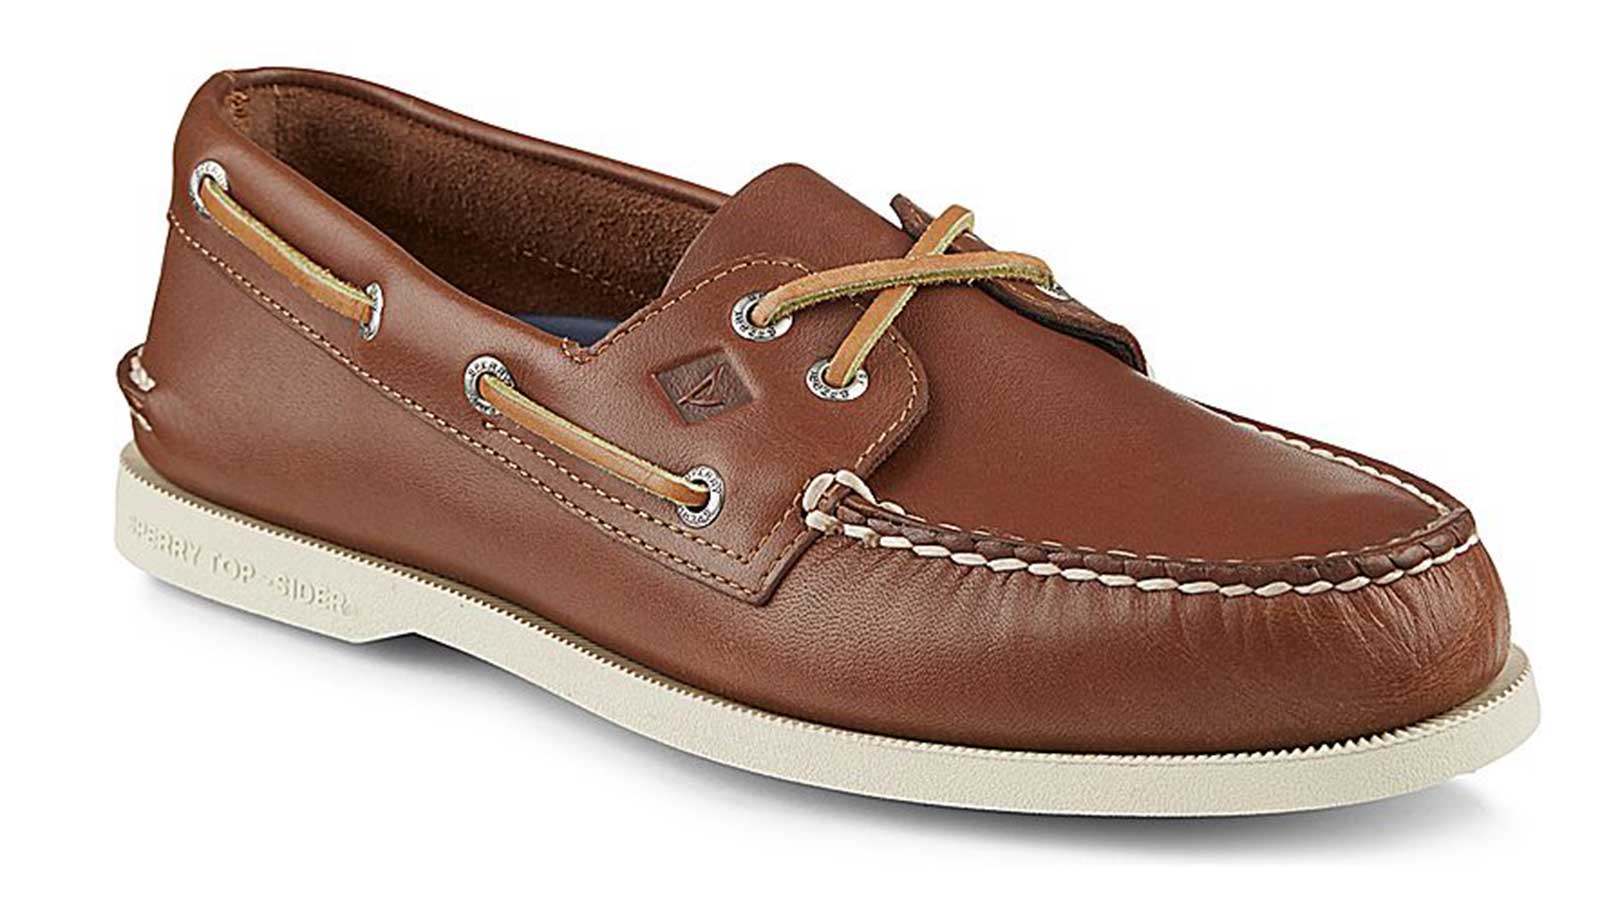 Sperry Topsider Men's Boat Shoe | best mens boat shoes